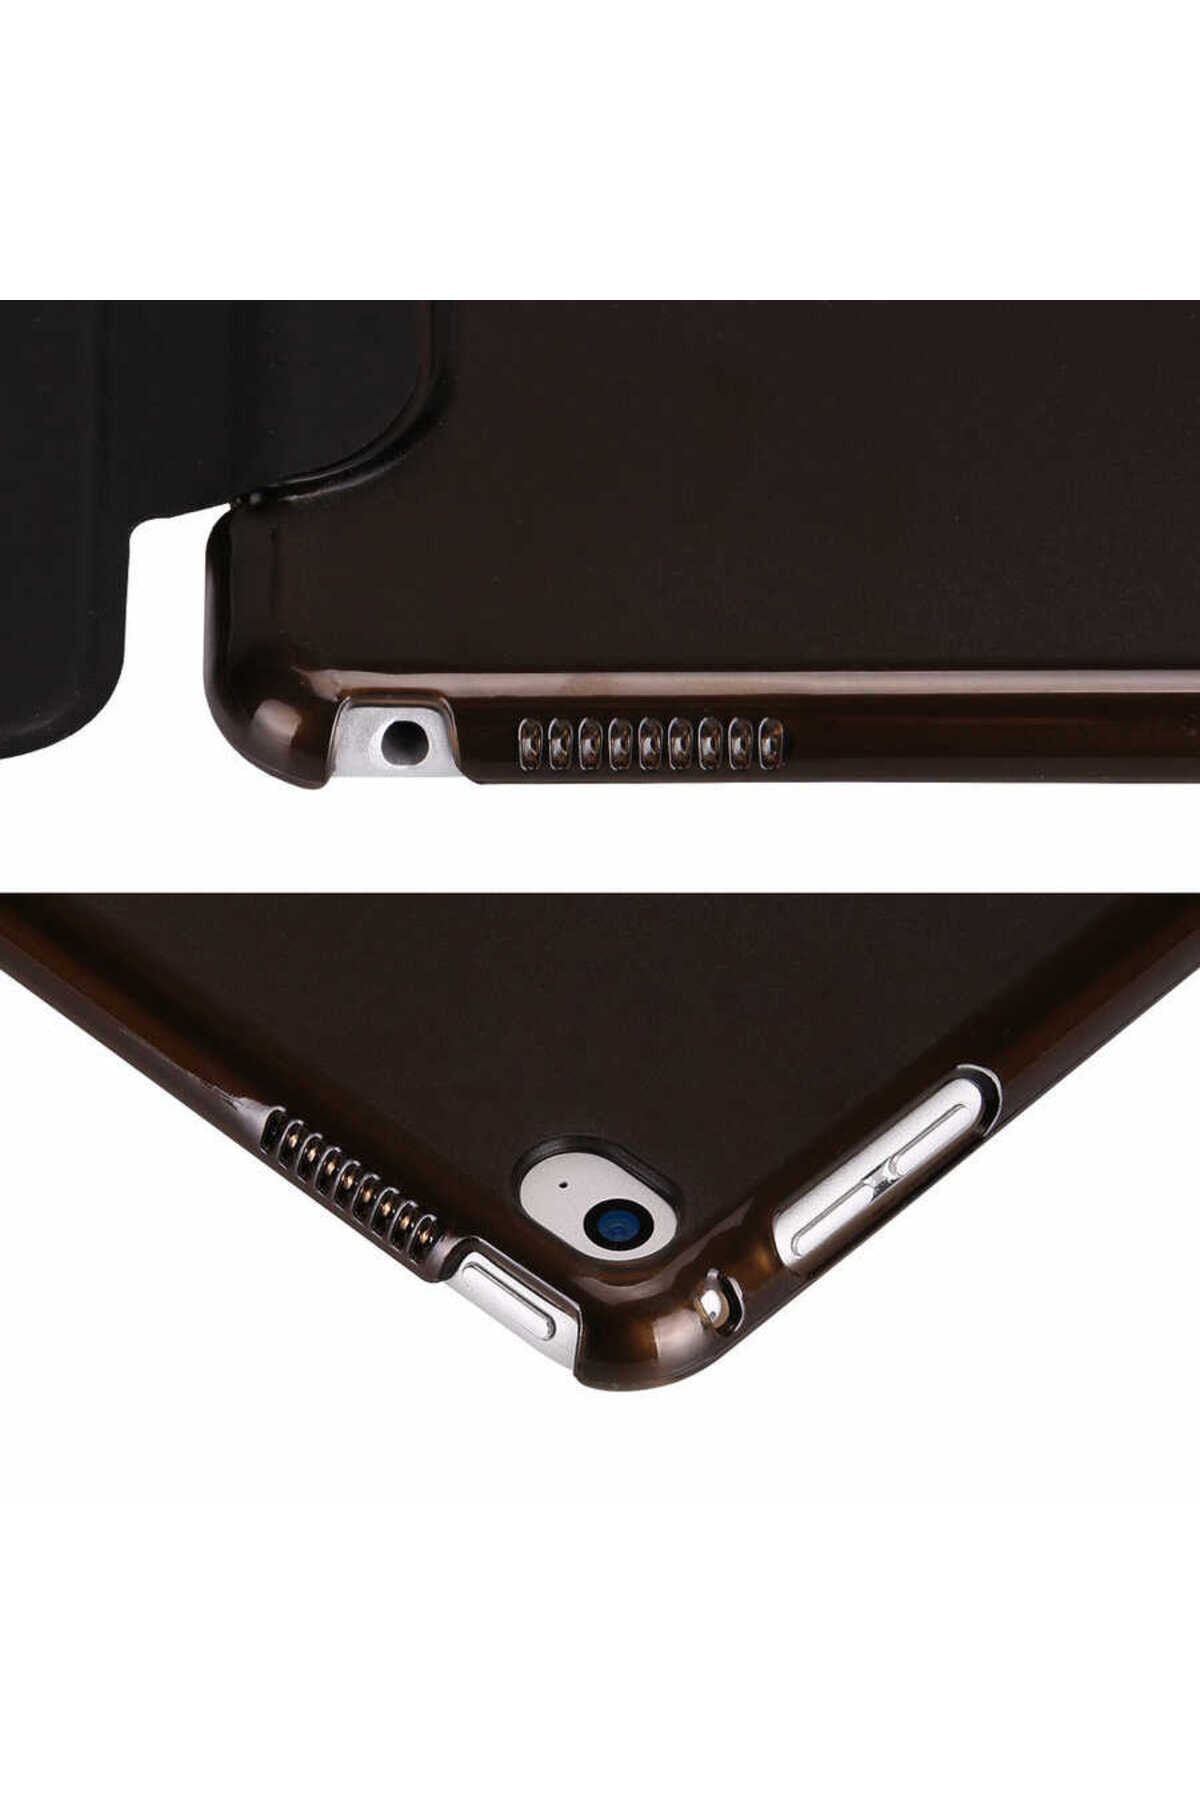 Gpack Samsung Galaxy Tab S2 8.0 T715 Kılıf Smart Cover Kapaklı Standlı sm11 + Nano + Kalem Bronz